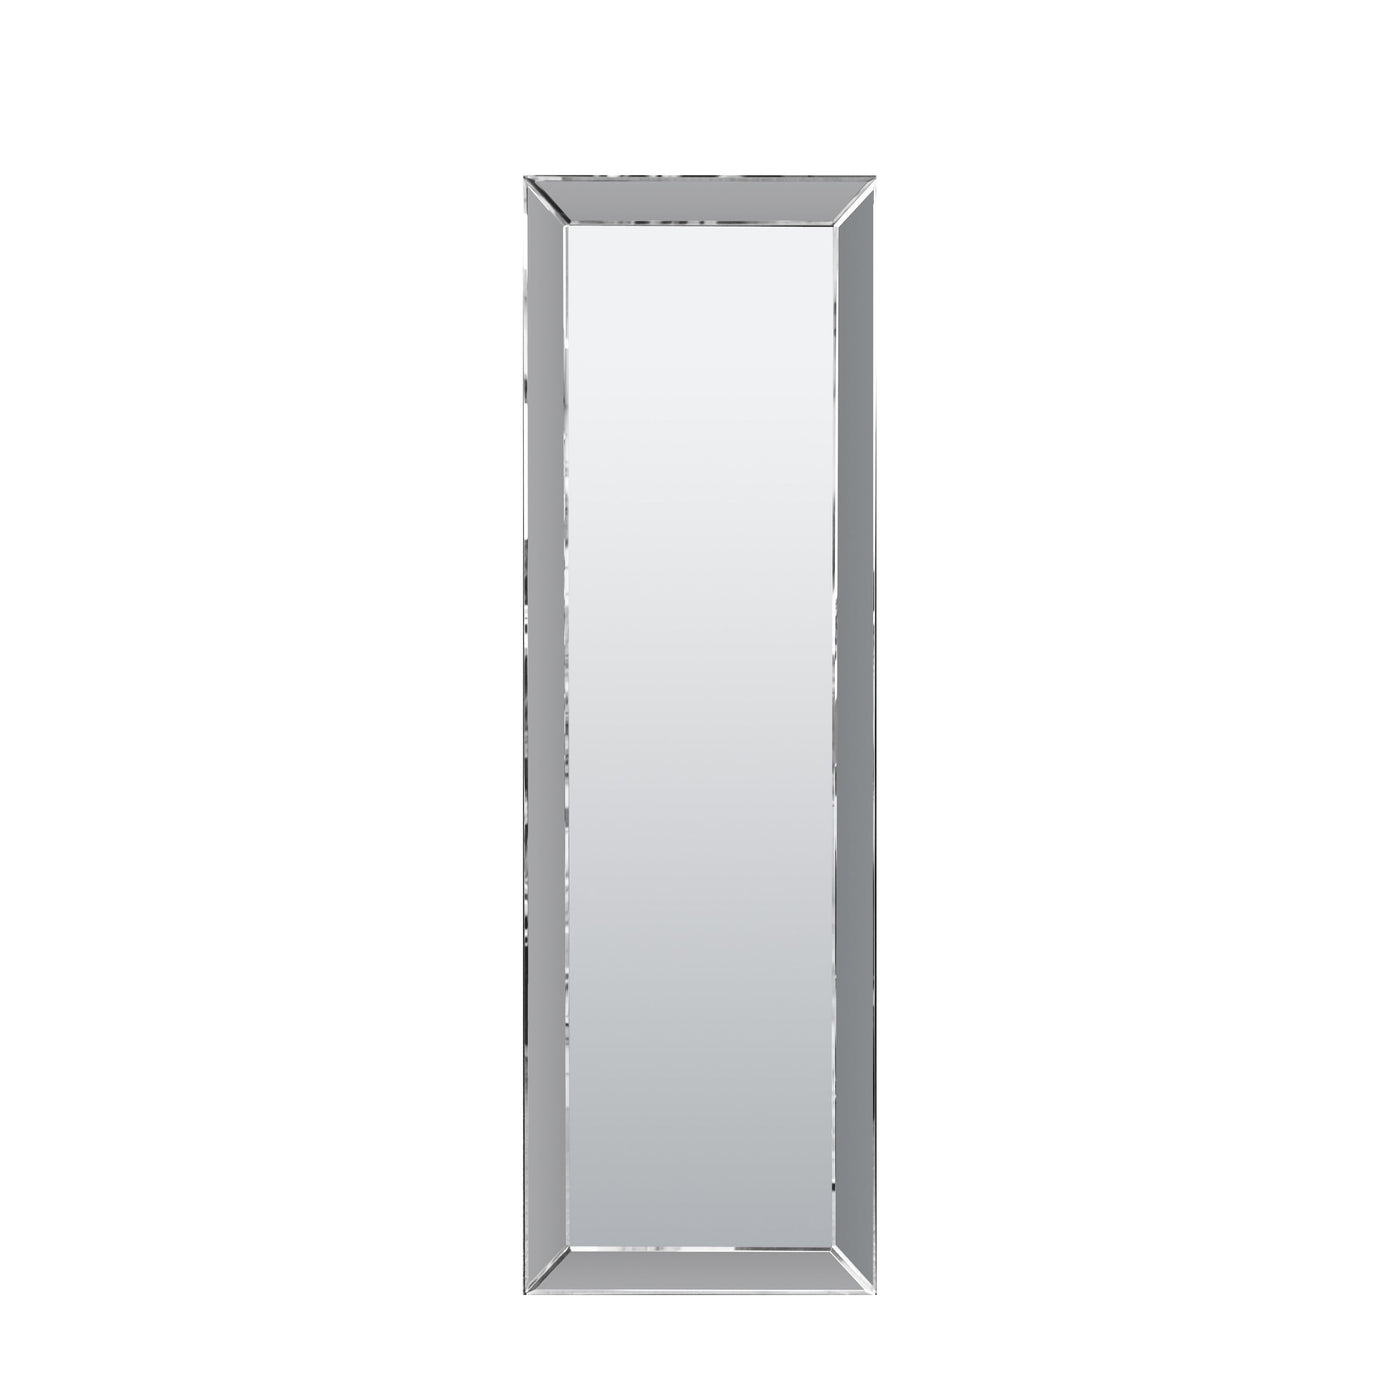 Cubert Mirror Euro Grey